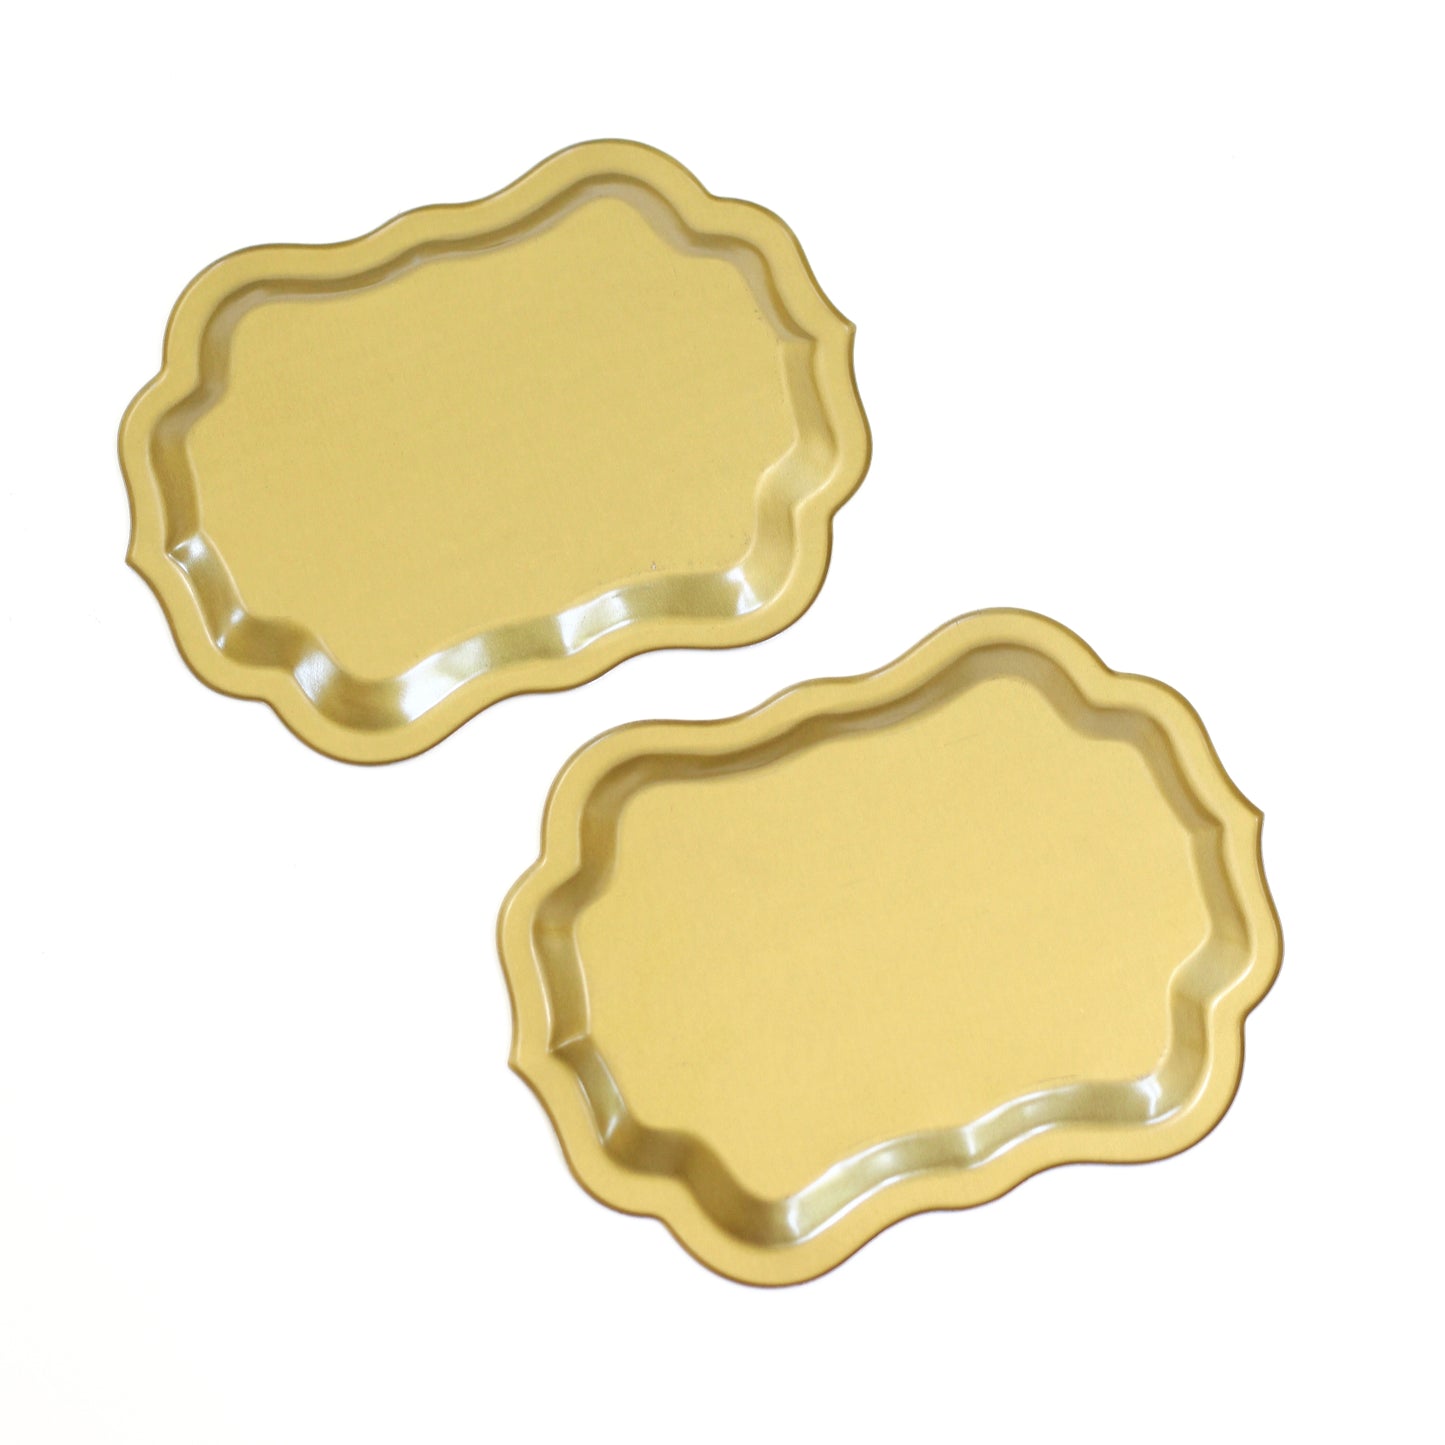 SOLD - Mid Century Modern Aqua & Gold Polka Dot Cocktail Trays